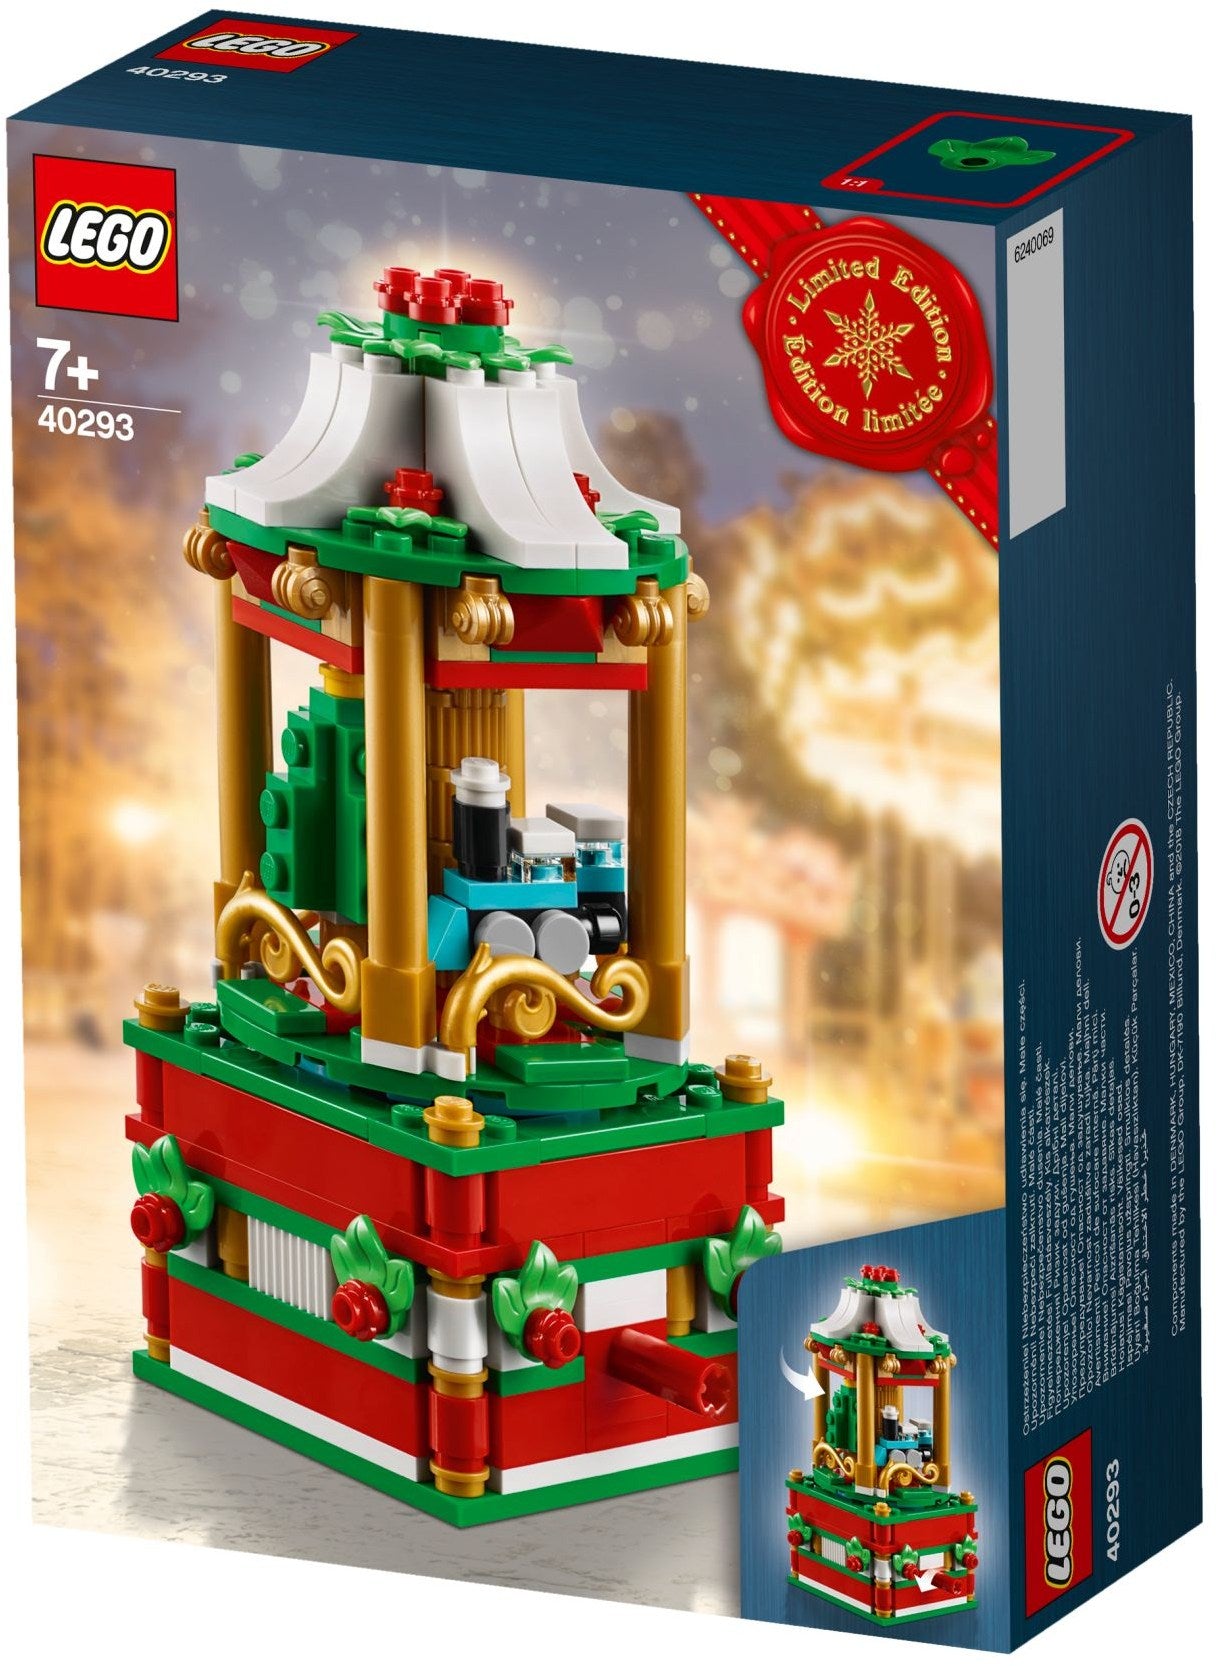 Lego Exclusive 40293 - Christmas Carousel